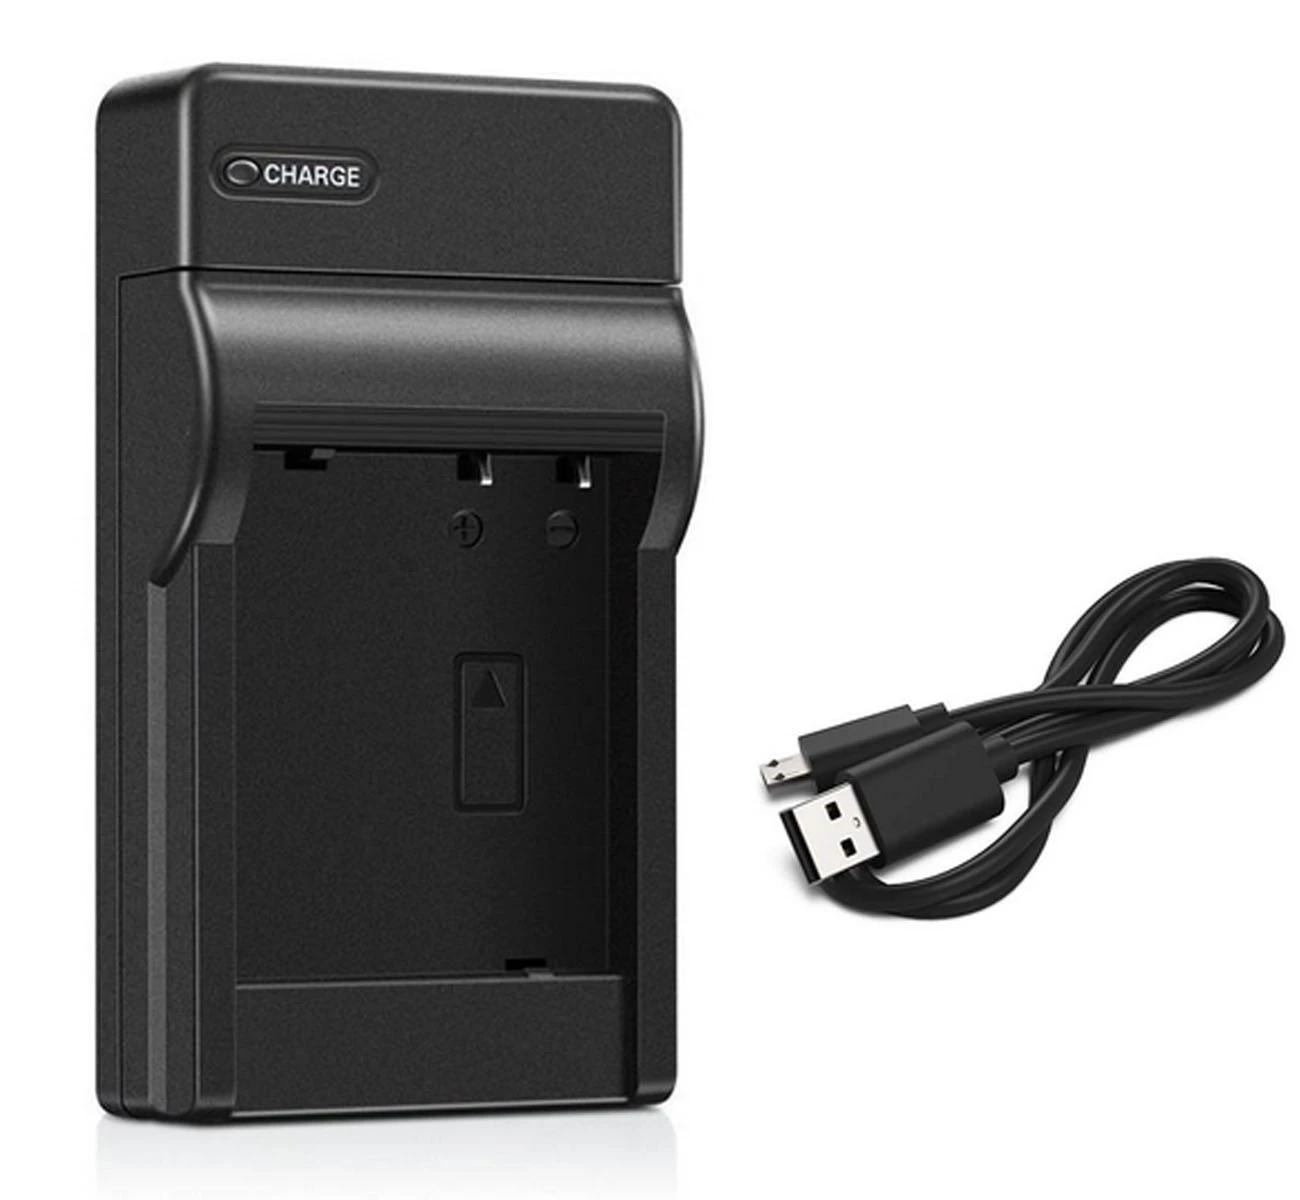 AG-HSC1UMC AG-HSC1UP Camcorder LCD USB Battery Charger for Panasonic AG-HSC1U AG-HSC1UE 